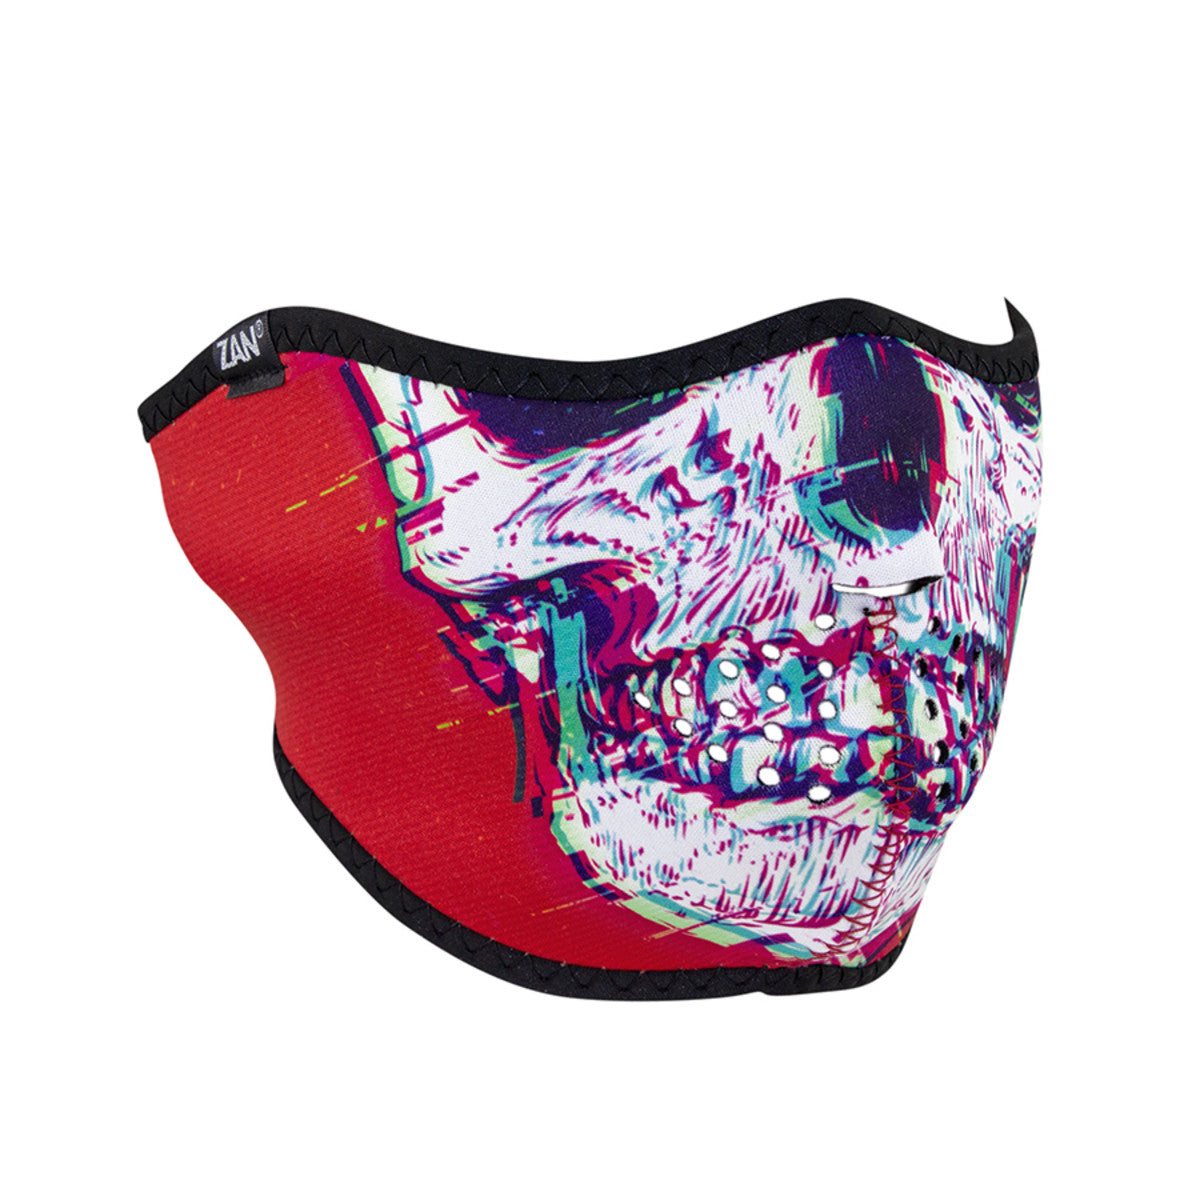 ZanHeadgear WNFM471H Half Mask Neoprene Glitch Skull